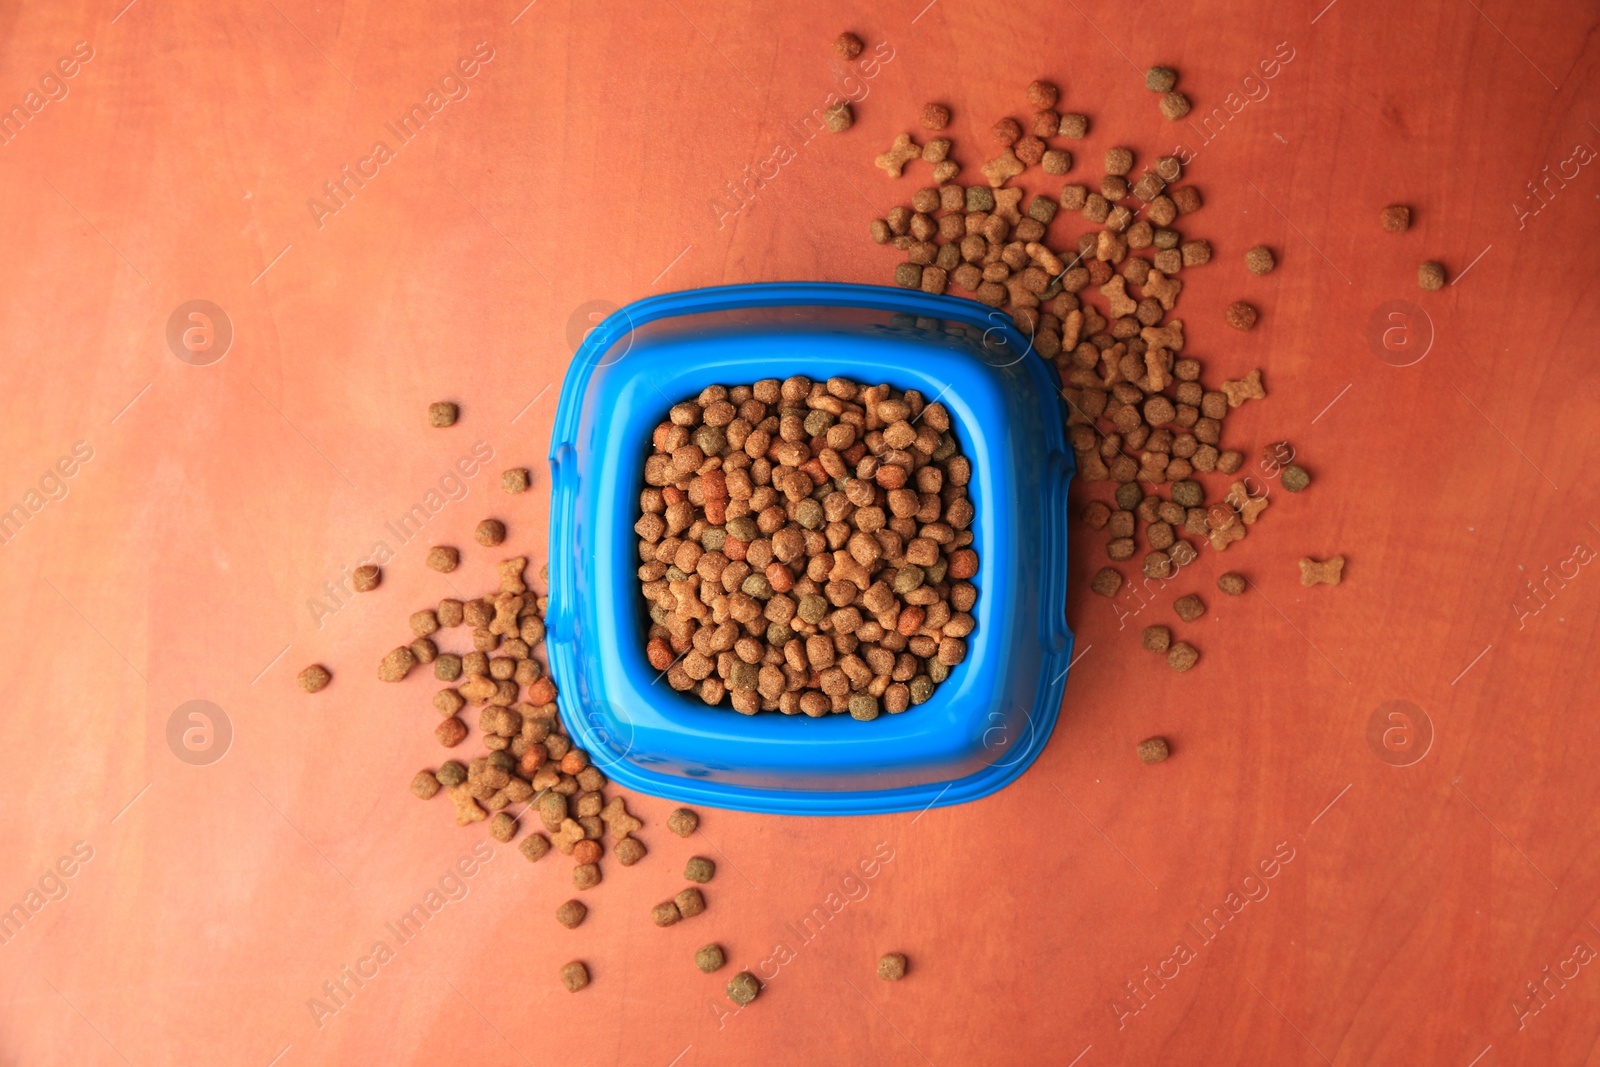 Photo of Dry pet food in feeding bowl on orange background, flat lay